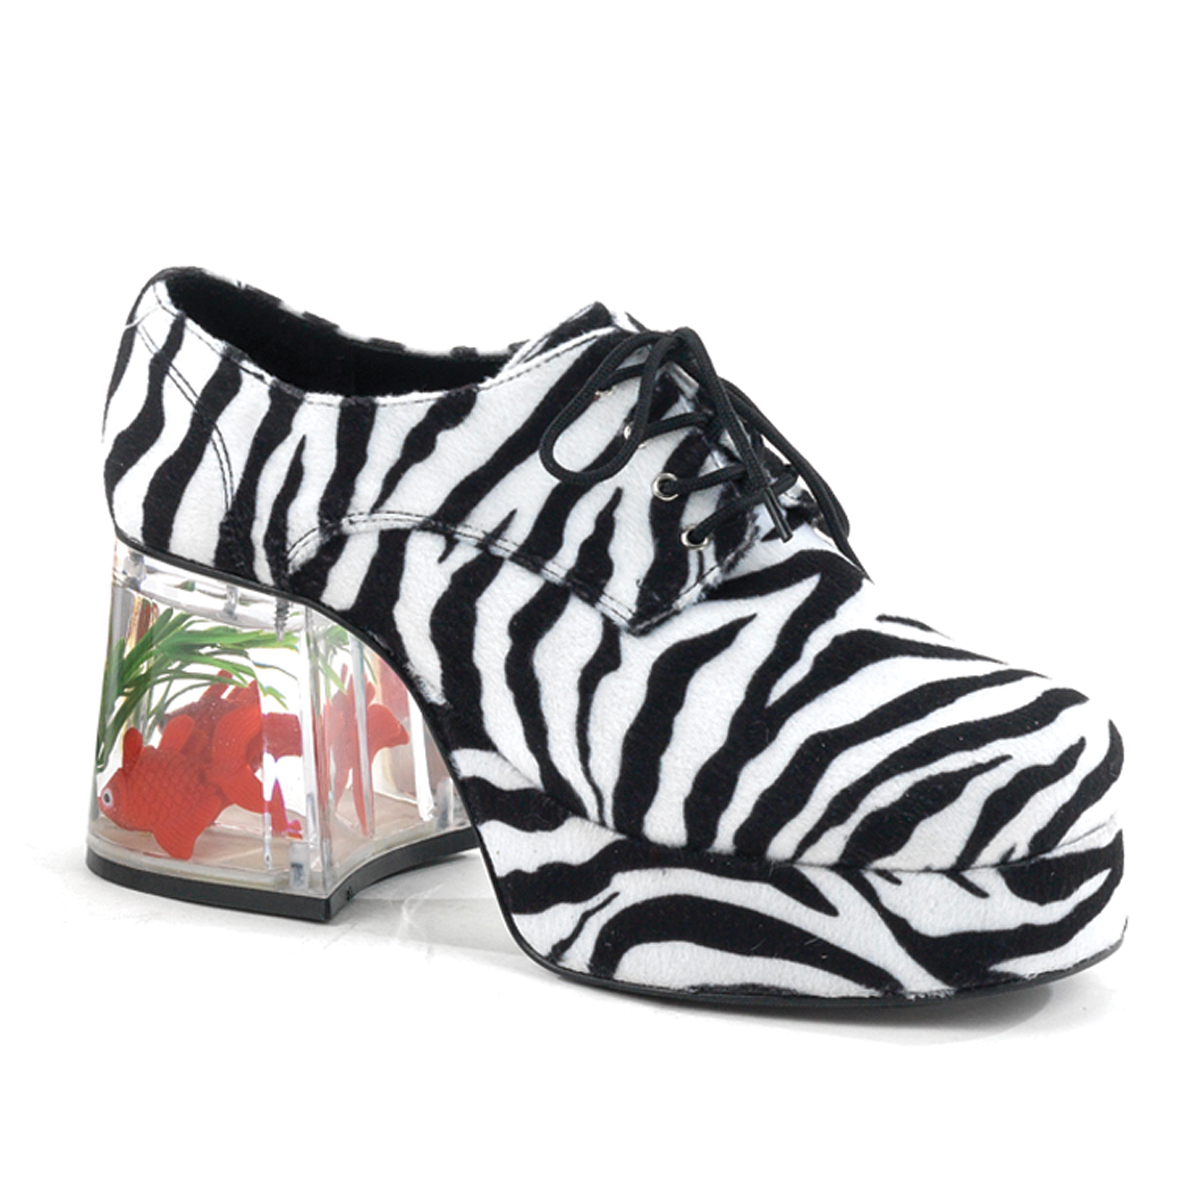 Sam Edelman Hazel Zebra Print Brahma Hair Heels | Shoes women heels, Heels, Pumps  heels